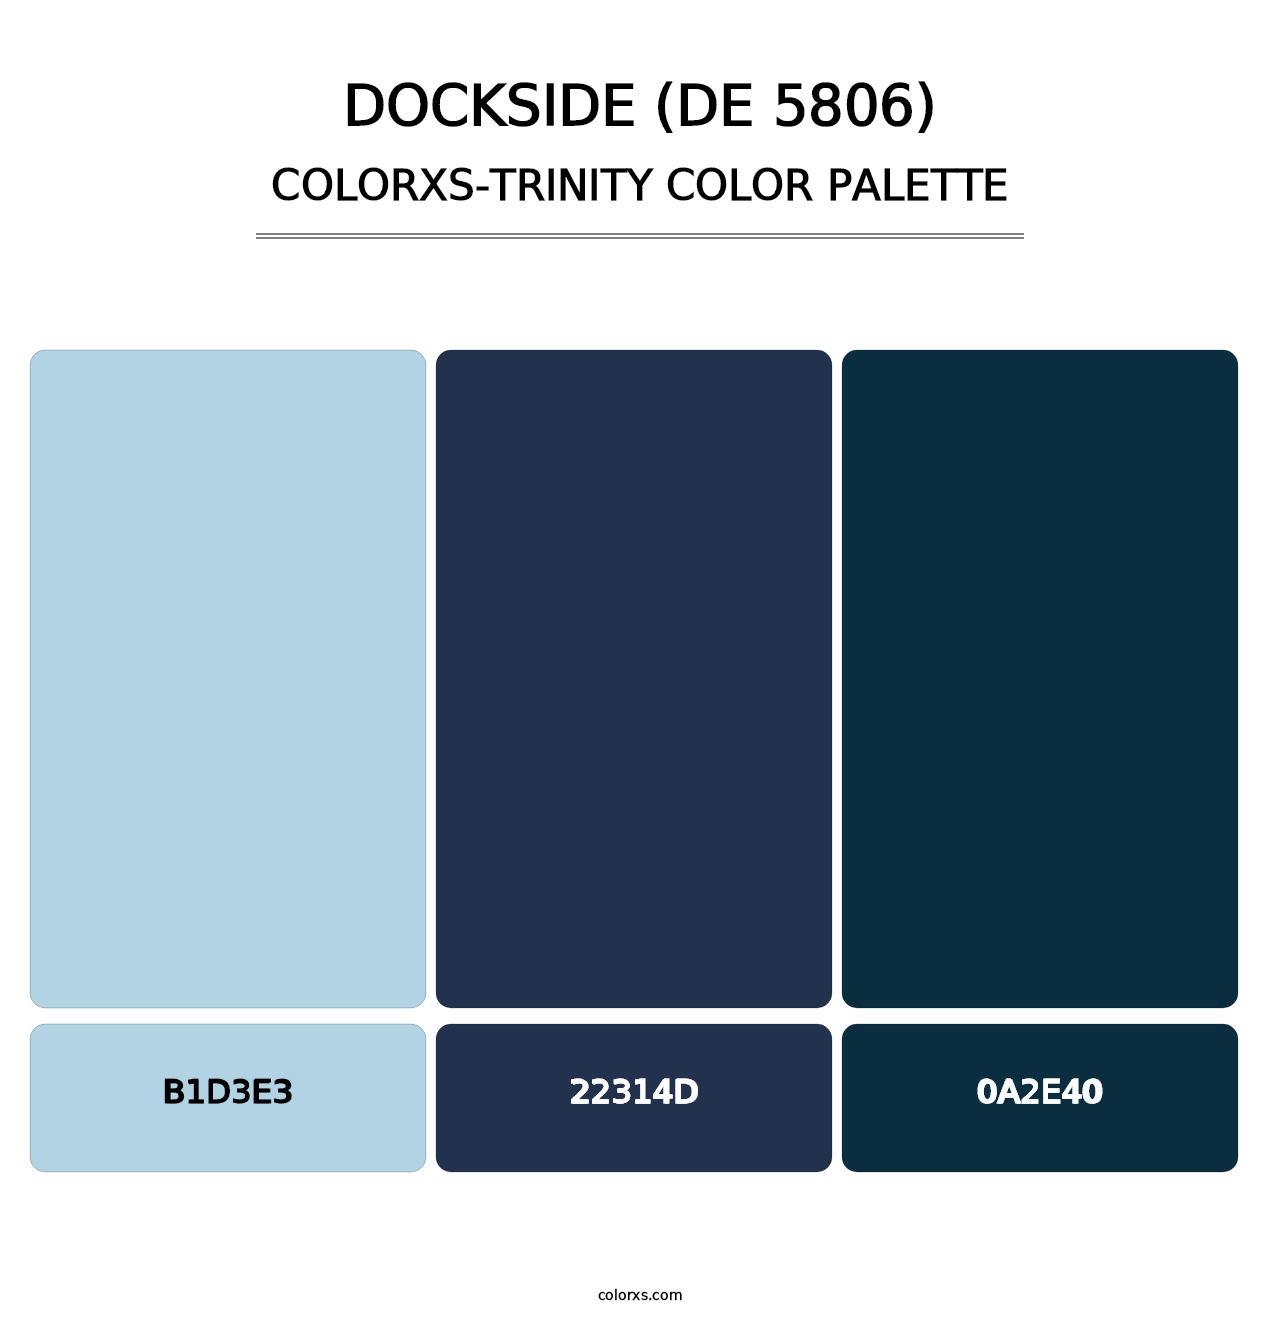 Dockside (DE 5806) - Colorxs Trinity Palette